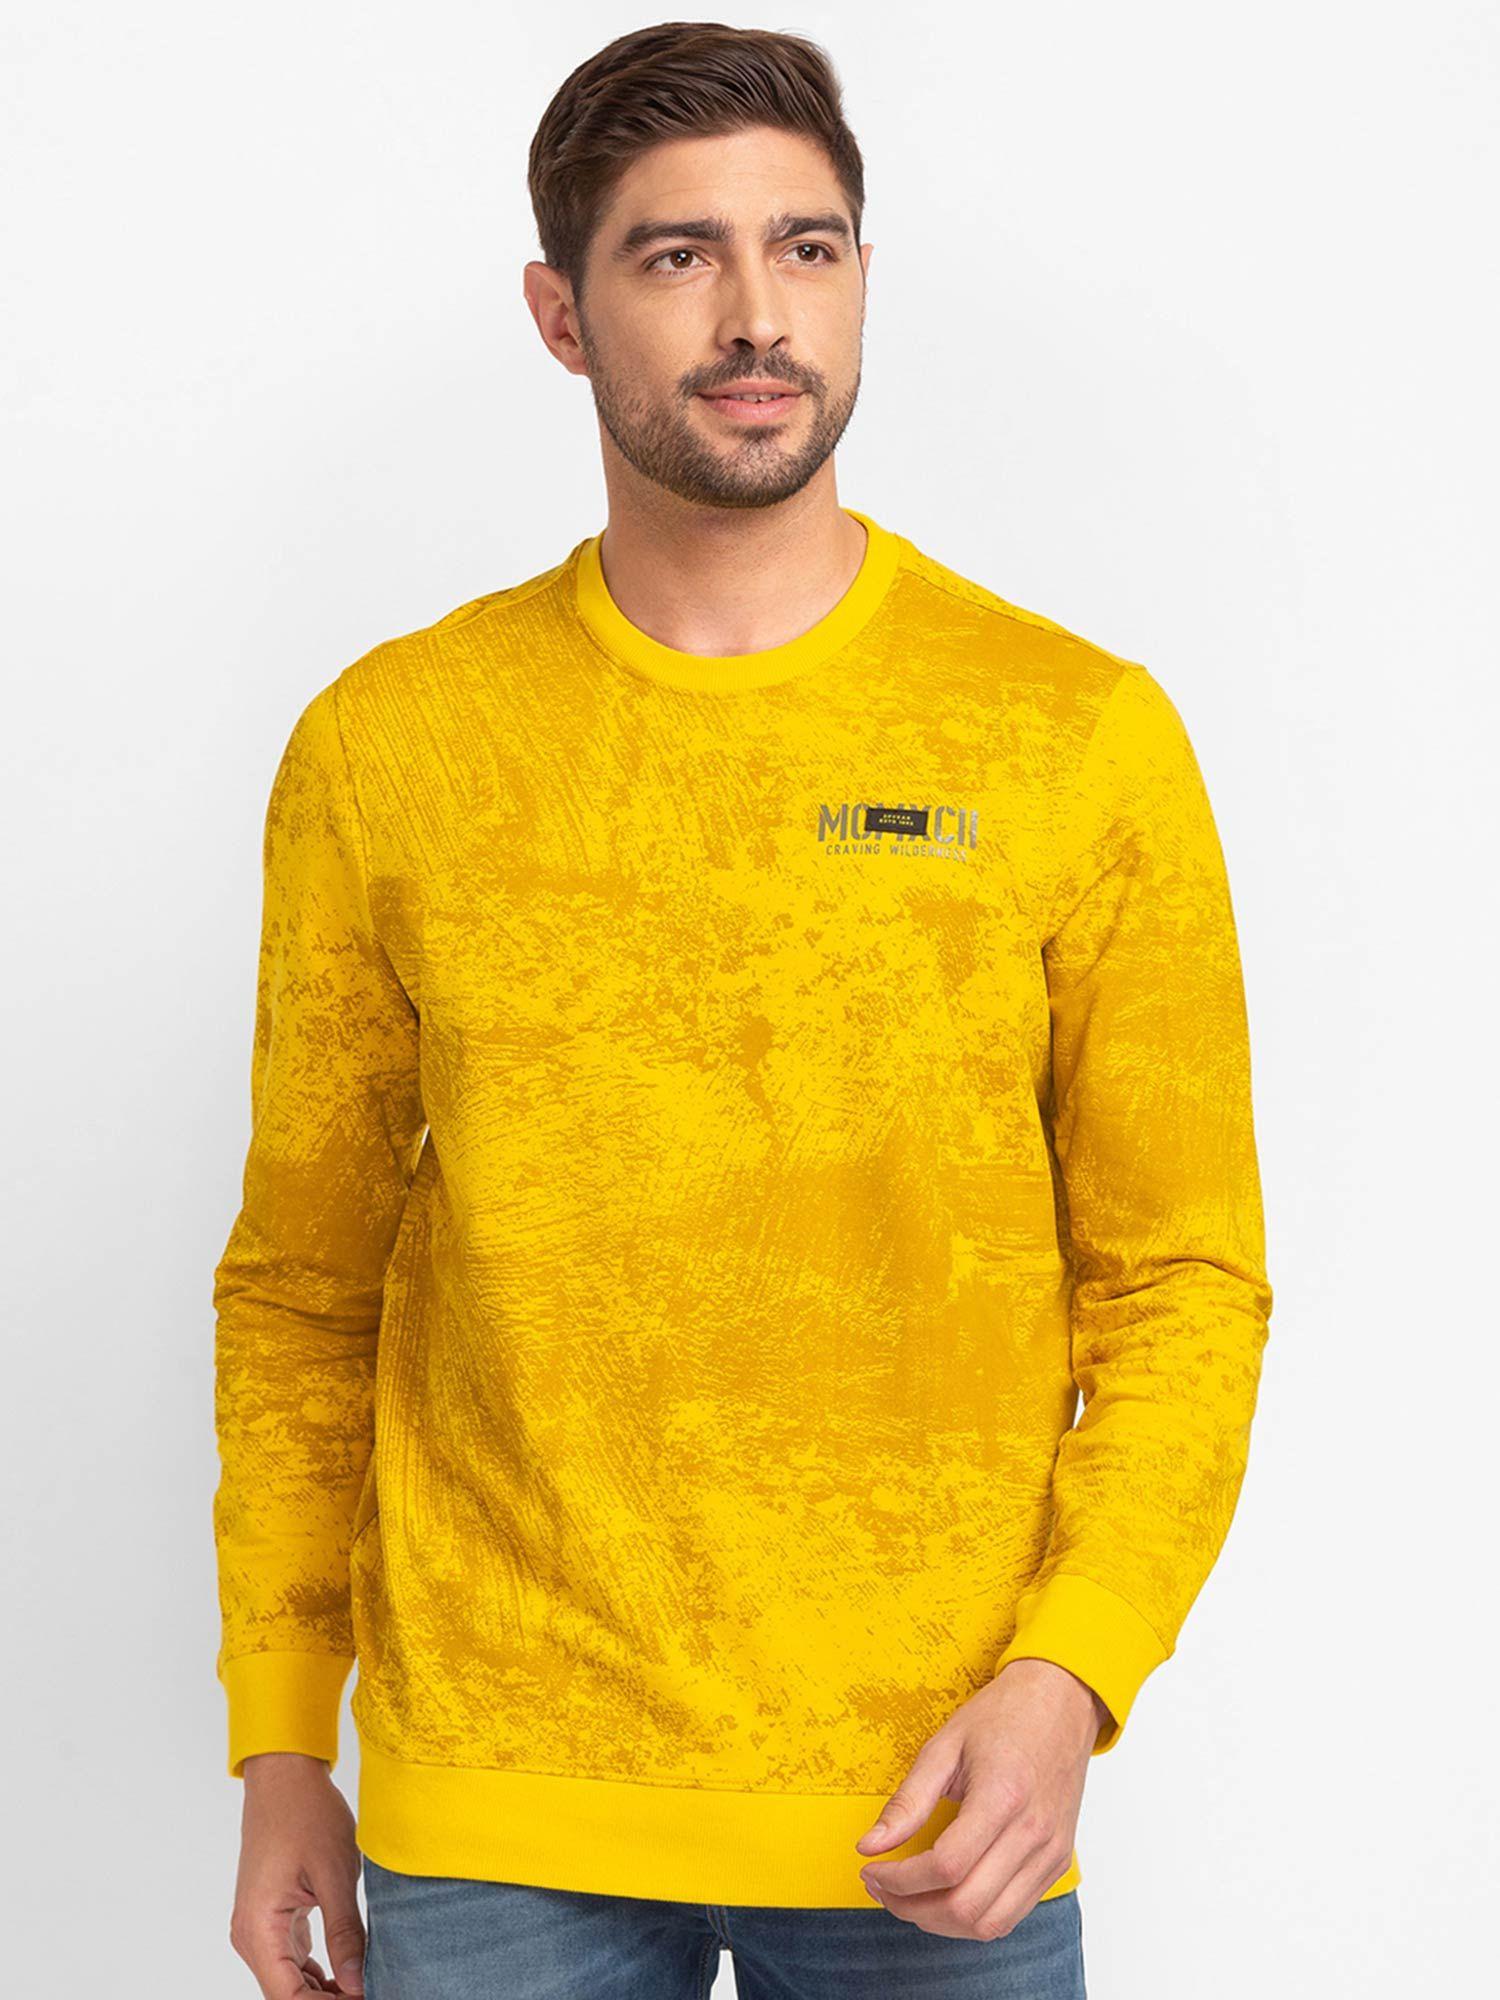 sulphur yellow cotton full sleeve round neck sweatshirt for men